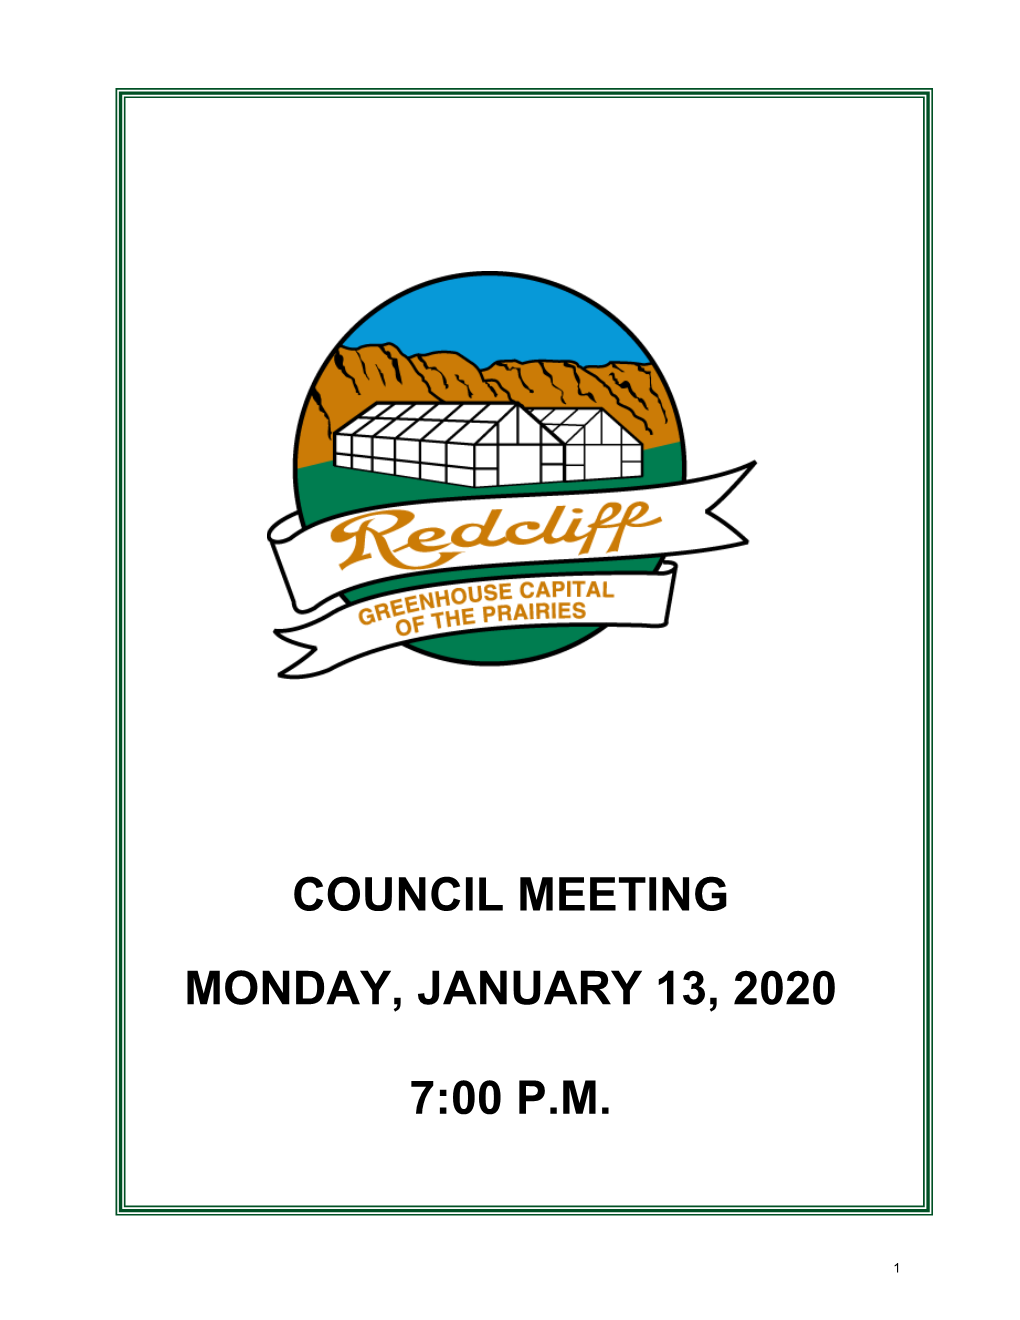 Council Meeting Monday, January 13, 2020 7:00 P.M